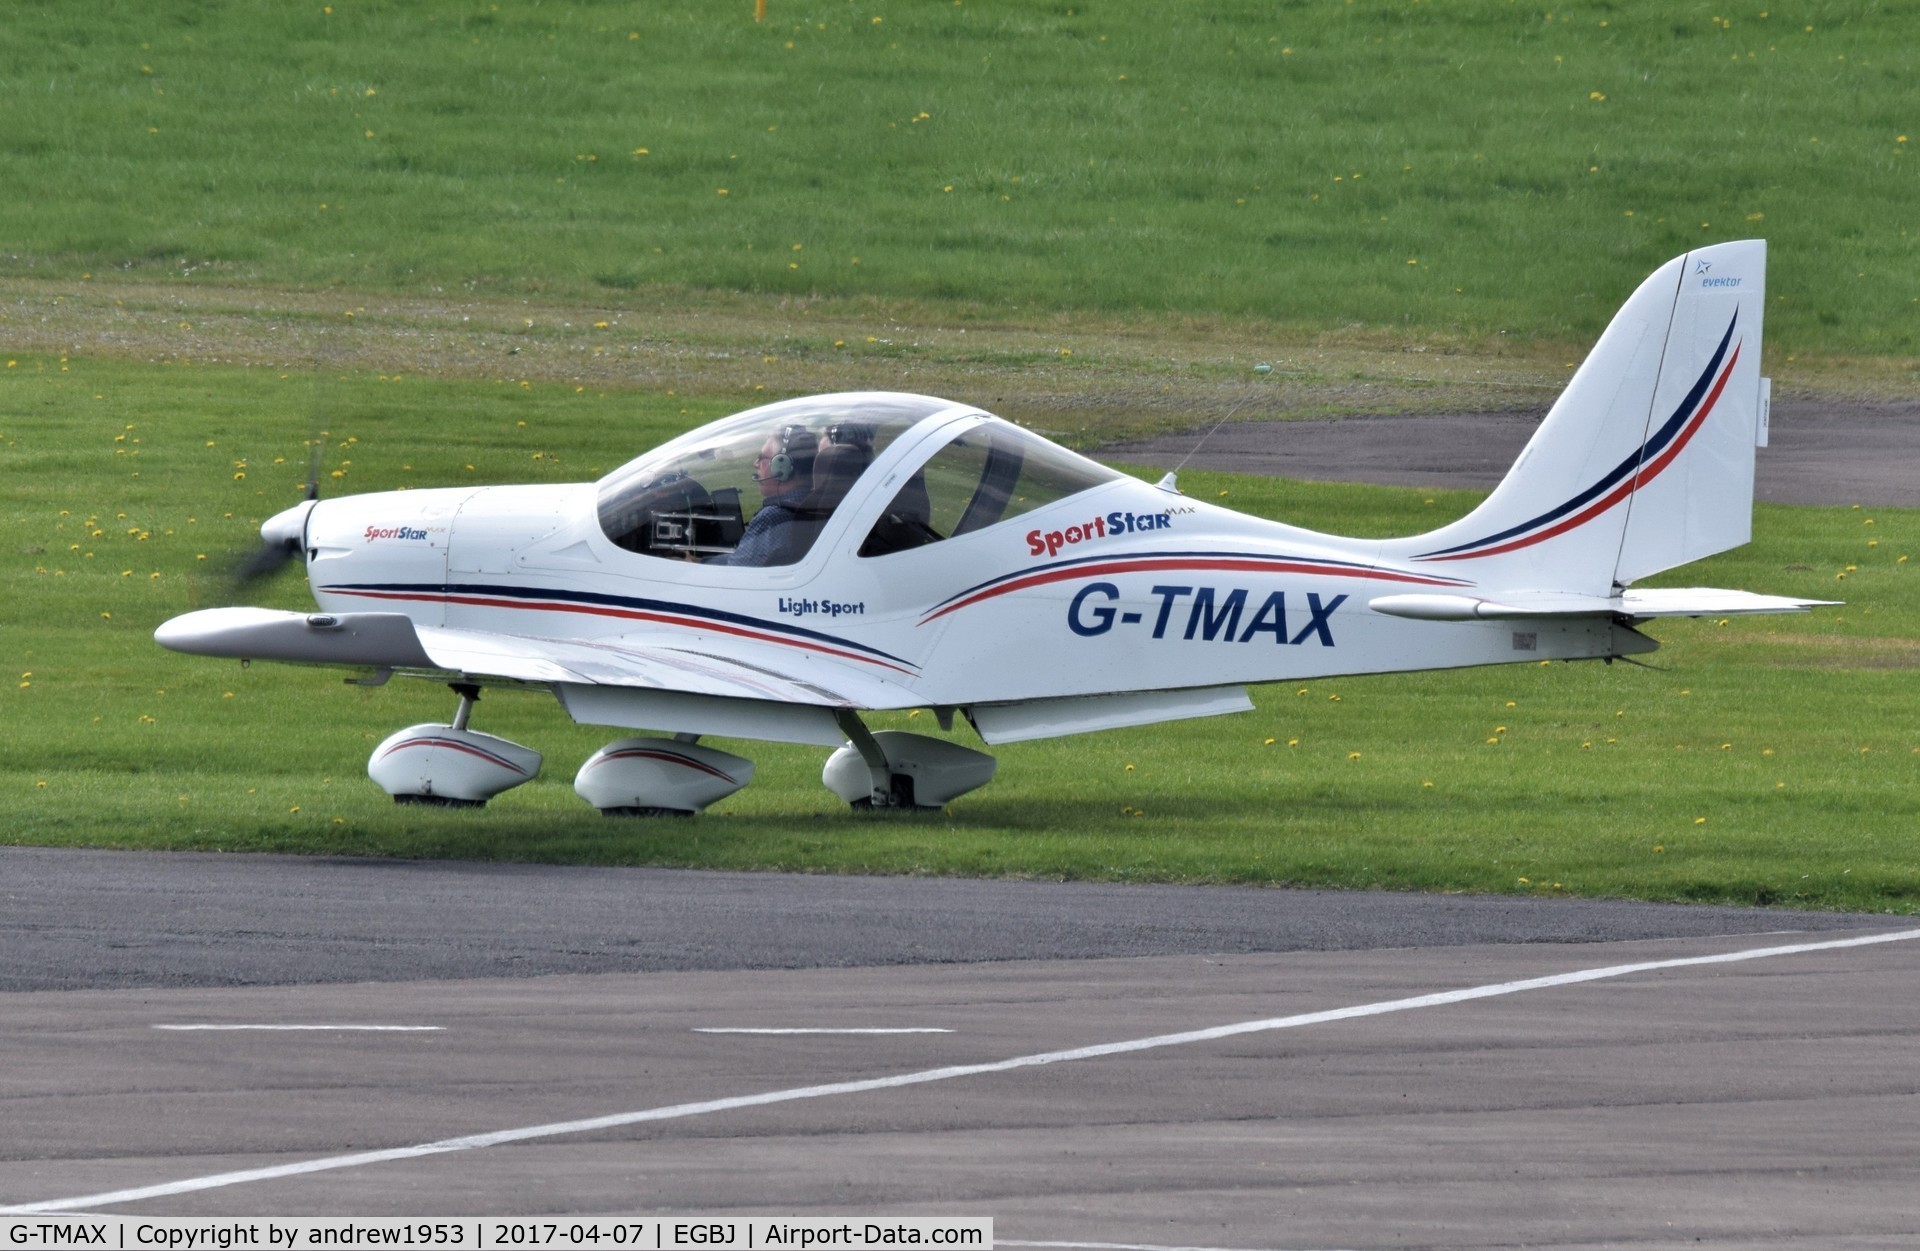 G-TMAX, 2010 Evektor-Aerotechnik Sportstar Max C/N 2010-1305, G-TMAX at Gloucestershire Airport.